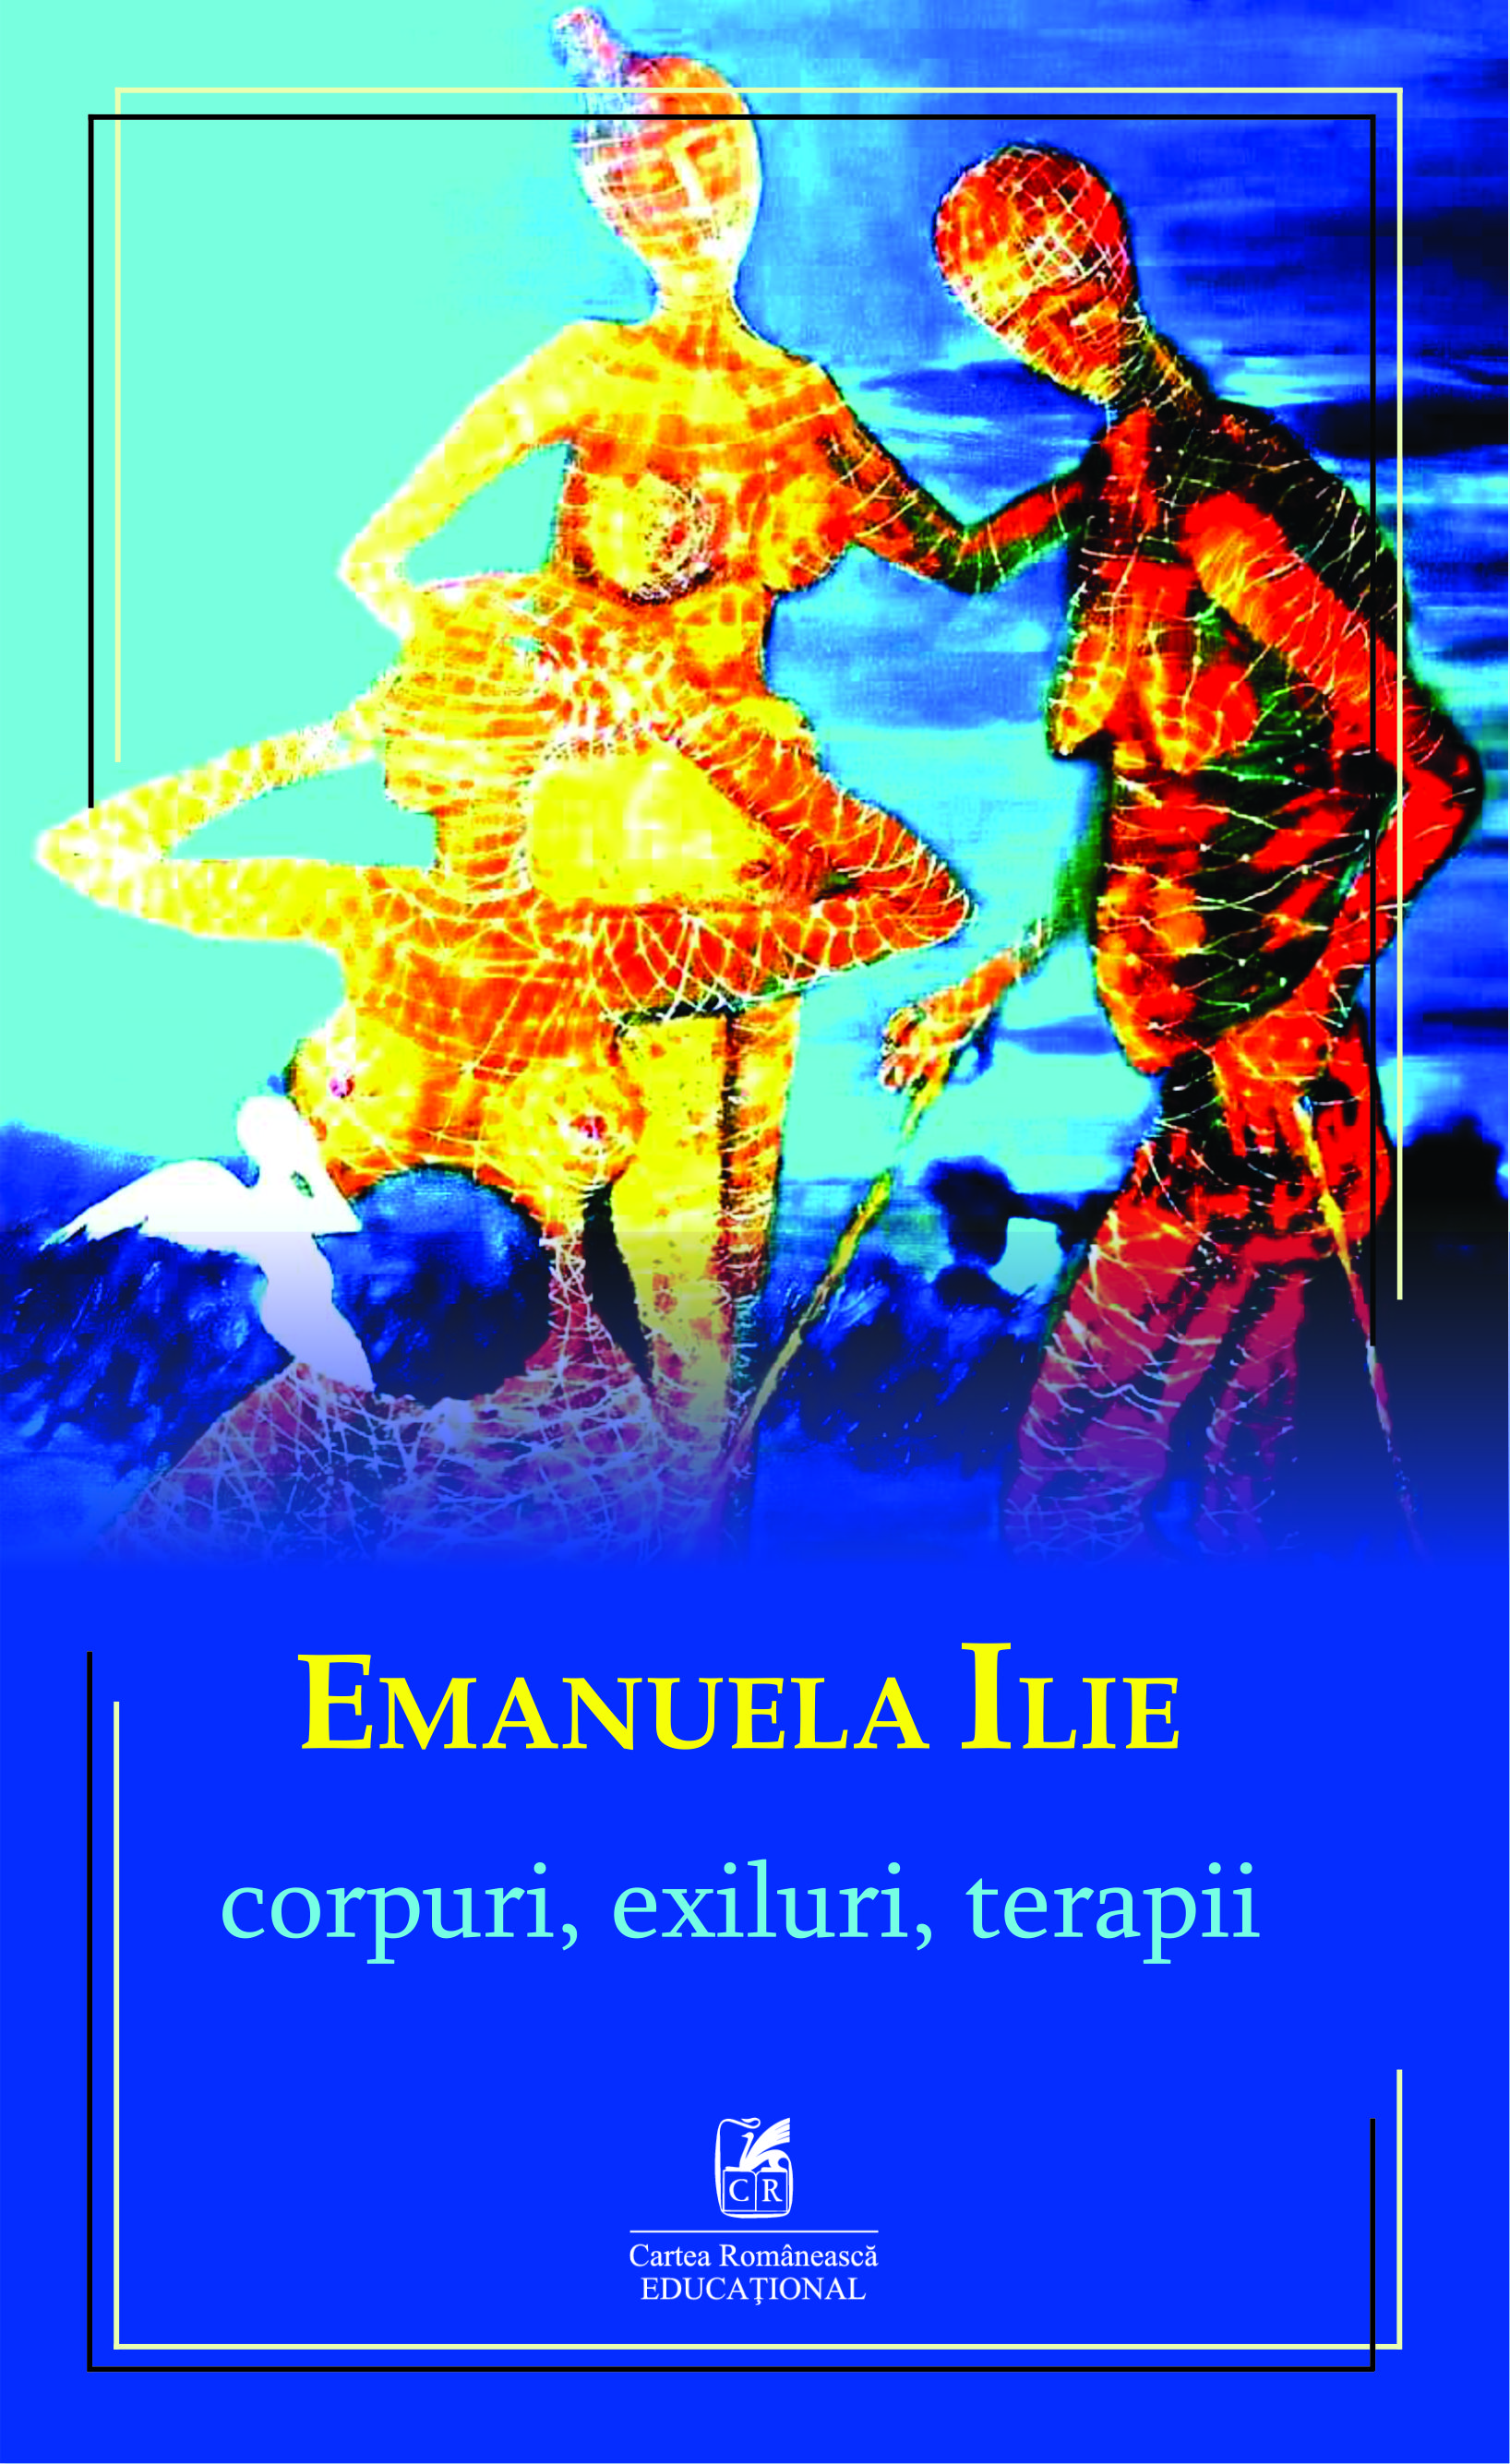 Corpuri, exiluri, terapii | Emanuela Ilie Cartea Romaneasca educational 2022